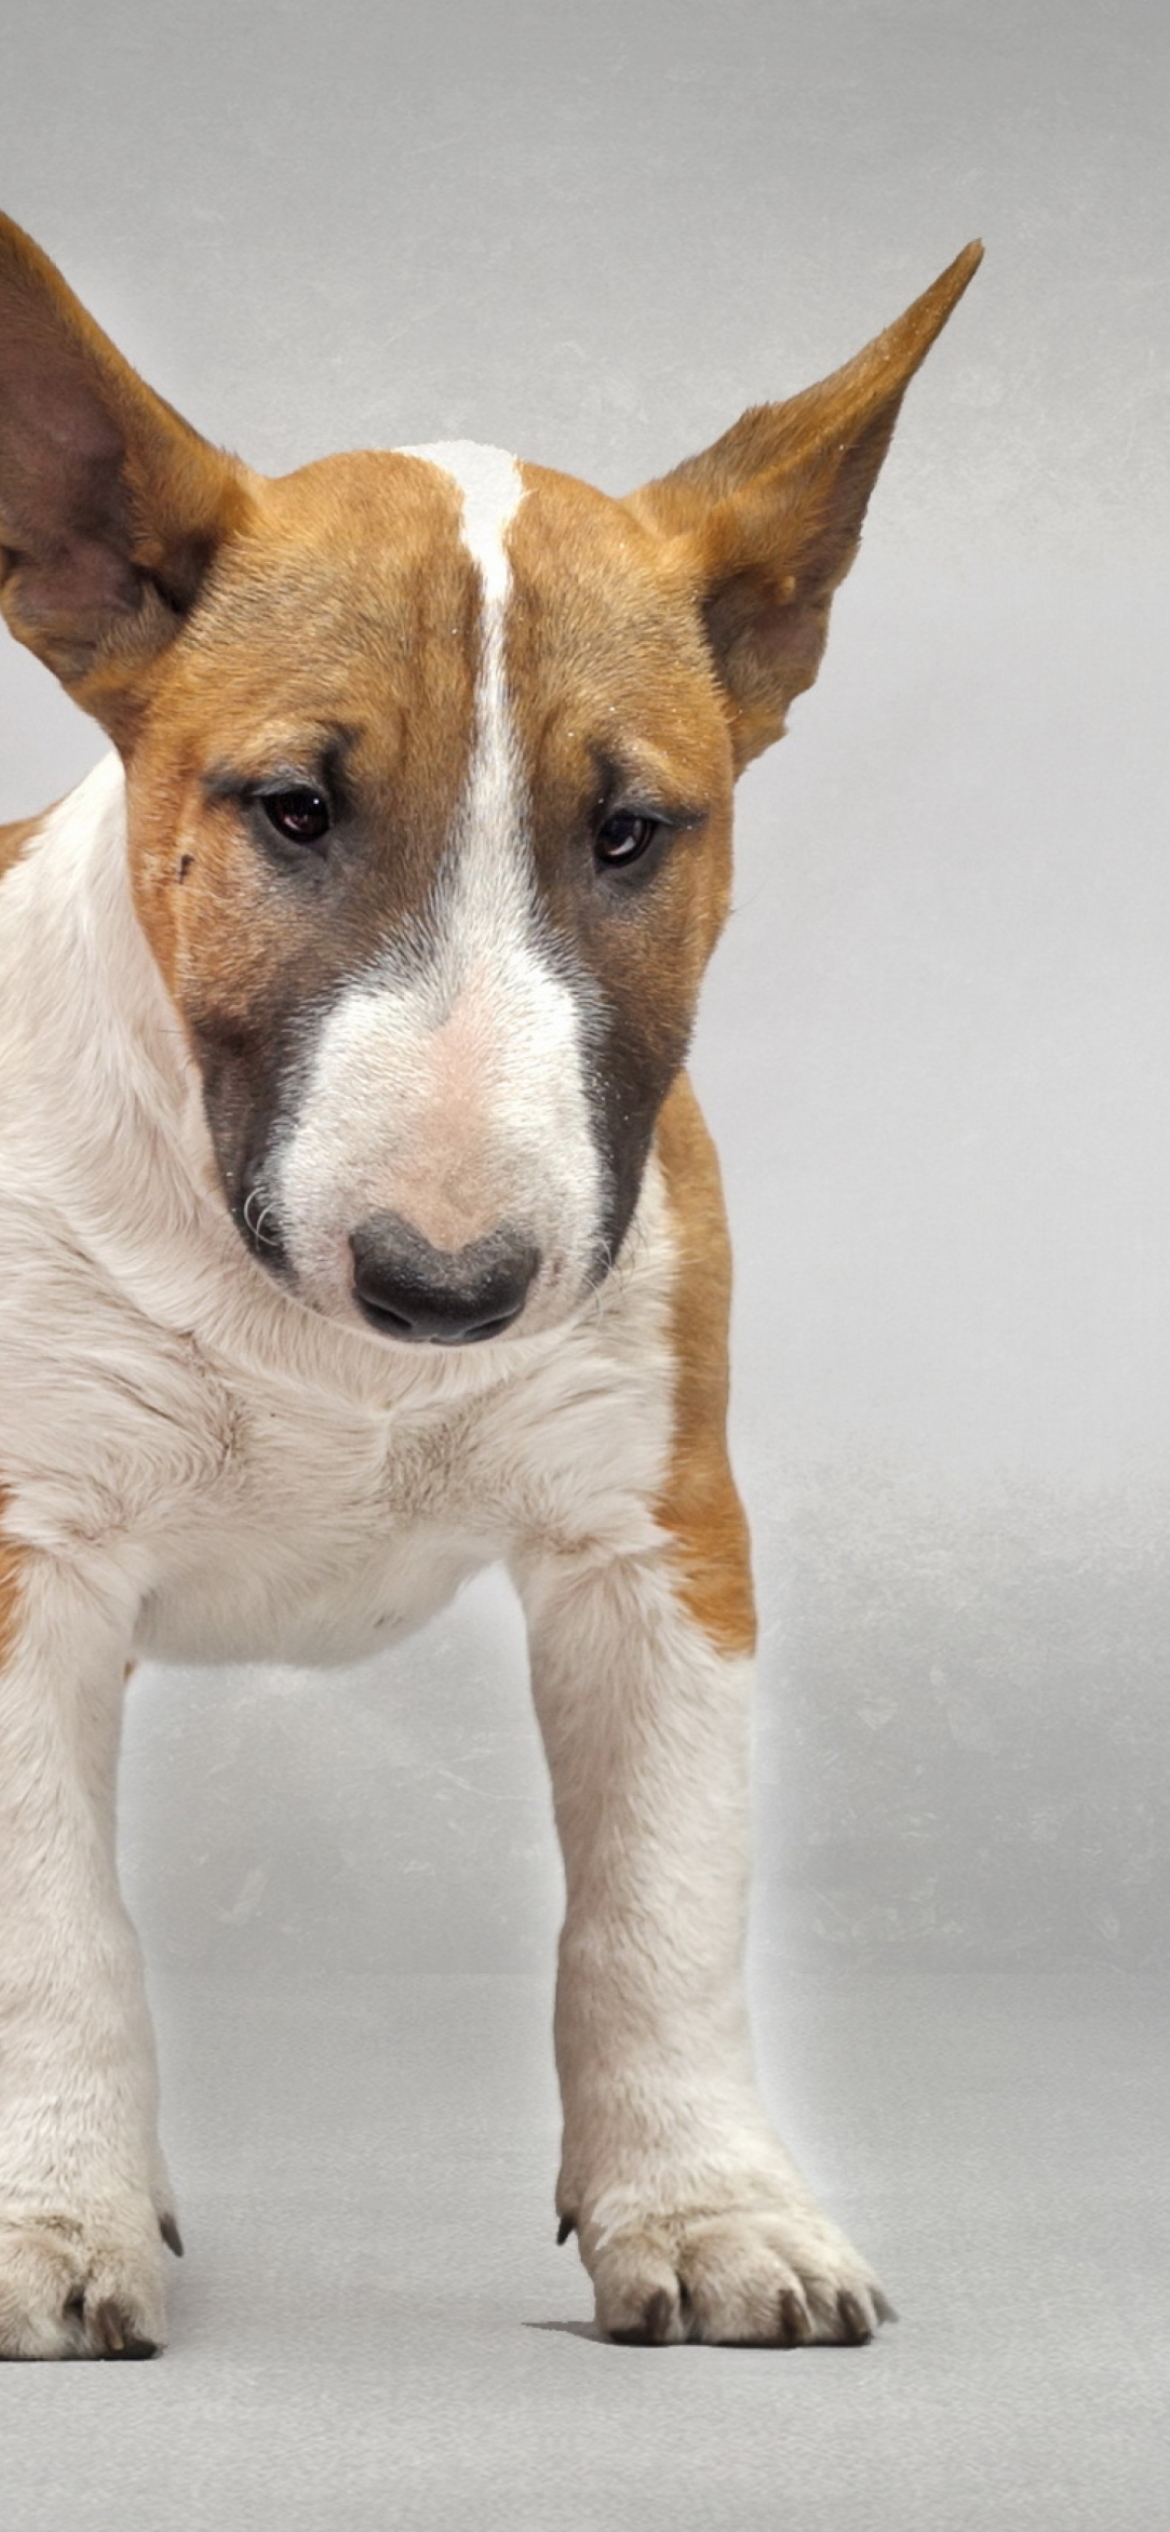 Bull Terrier - Fondos de pantalla gratis para iPhone 11 Pro